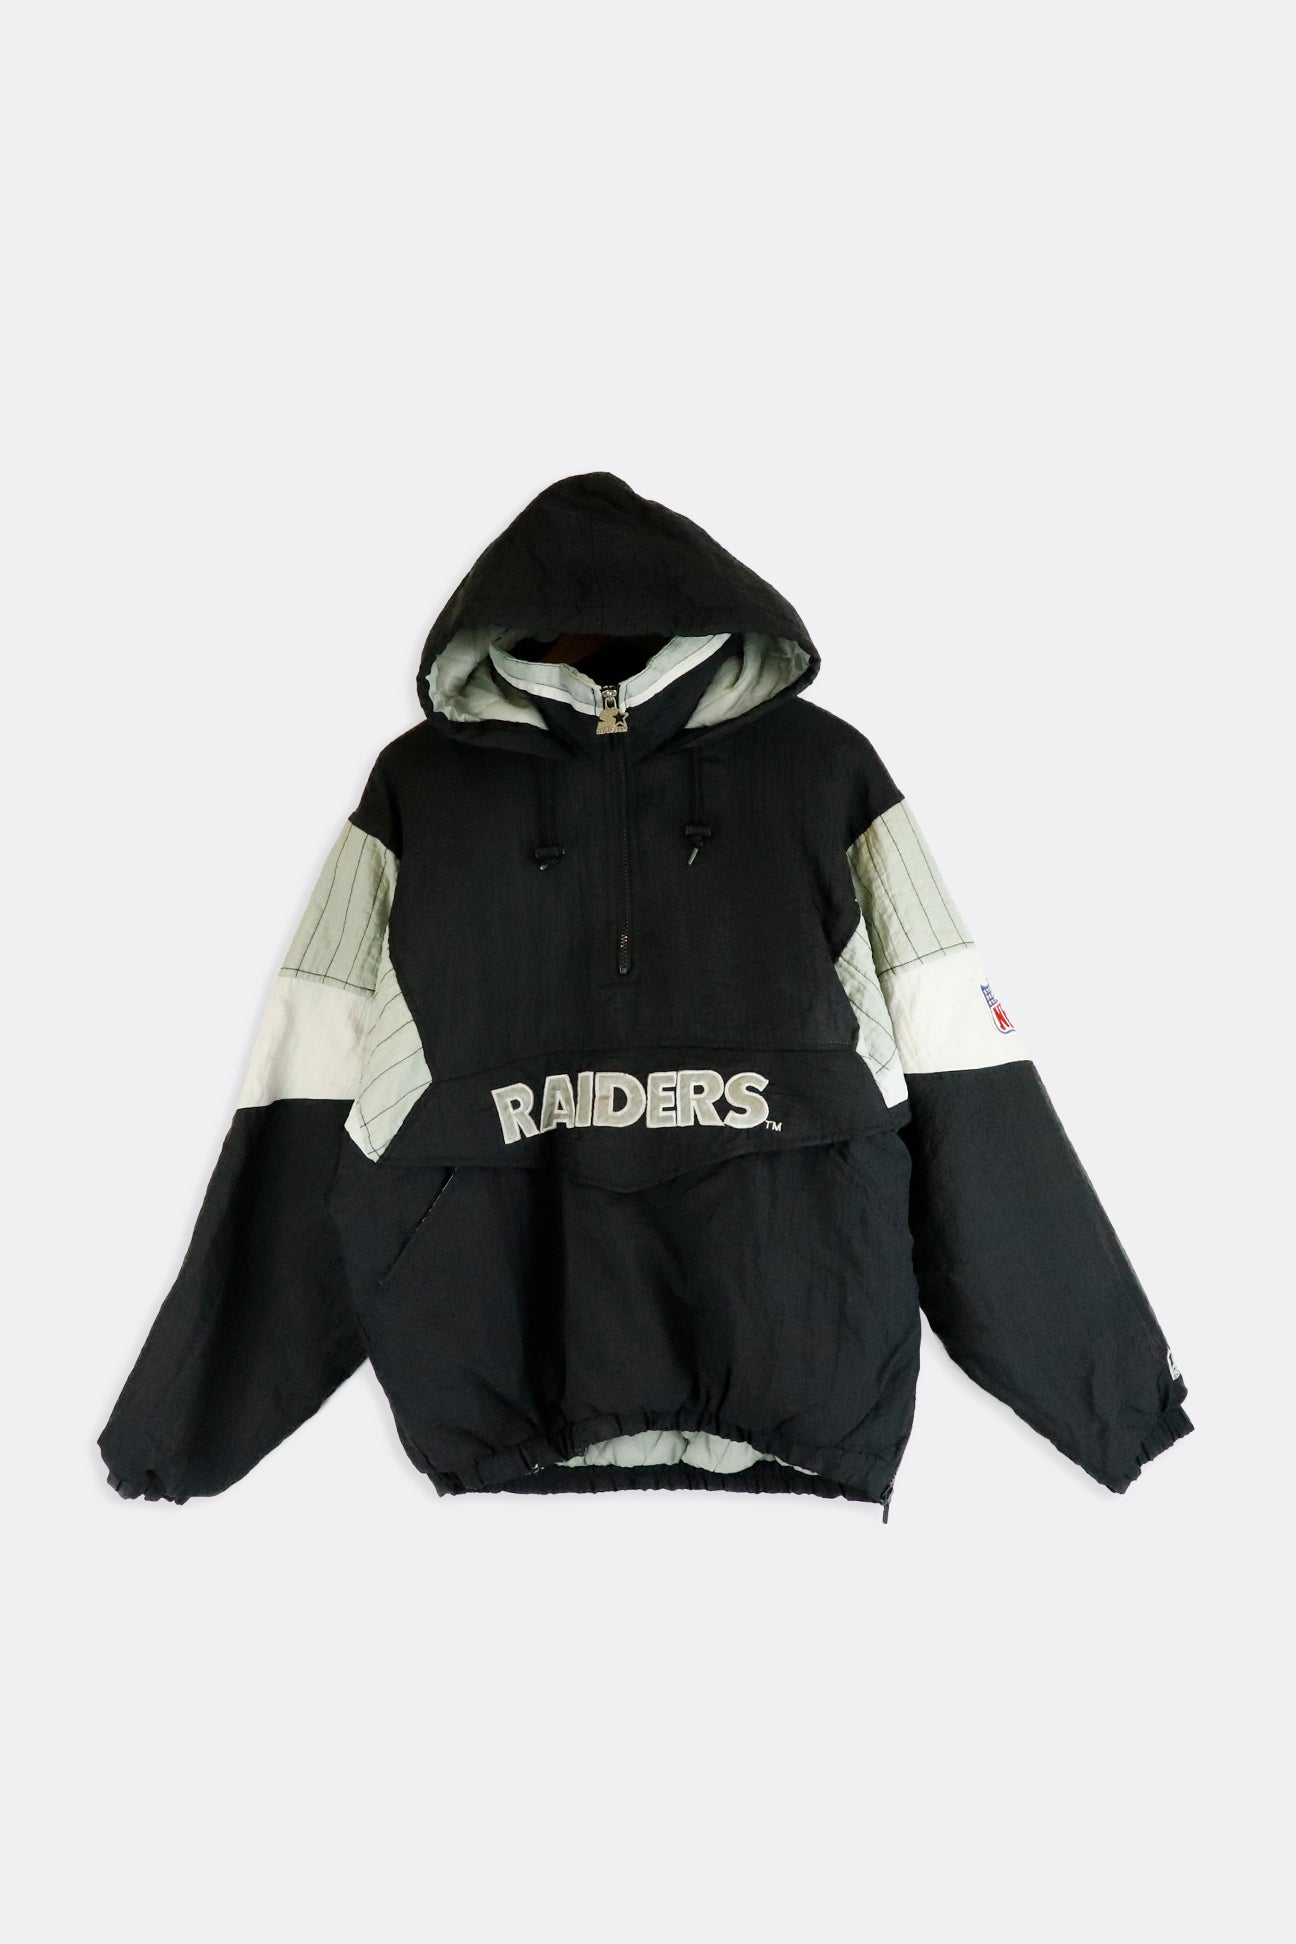 Vintage Starter NFL Las Vegas Raiders Half Zip Winter Jacket Sz M